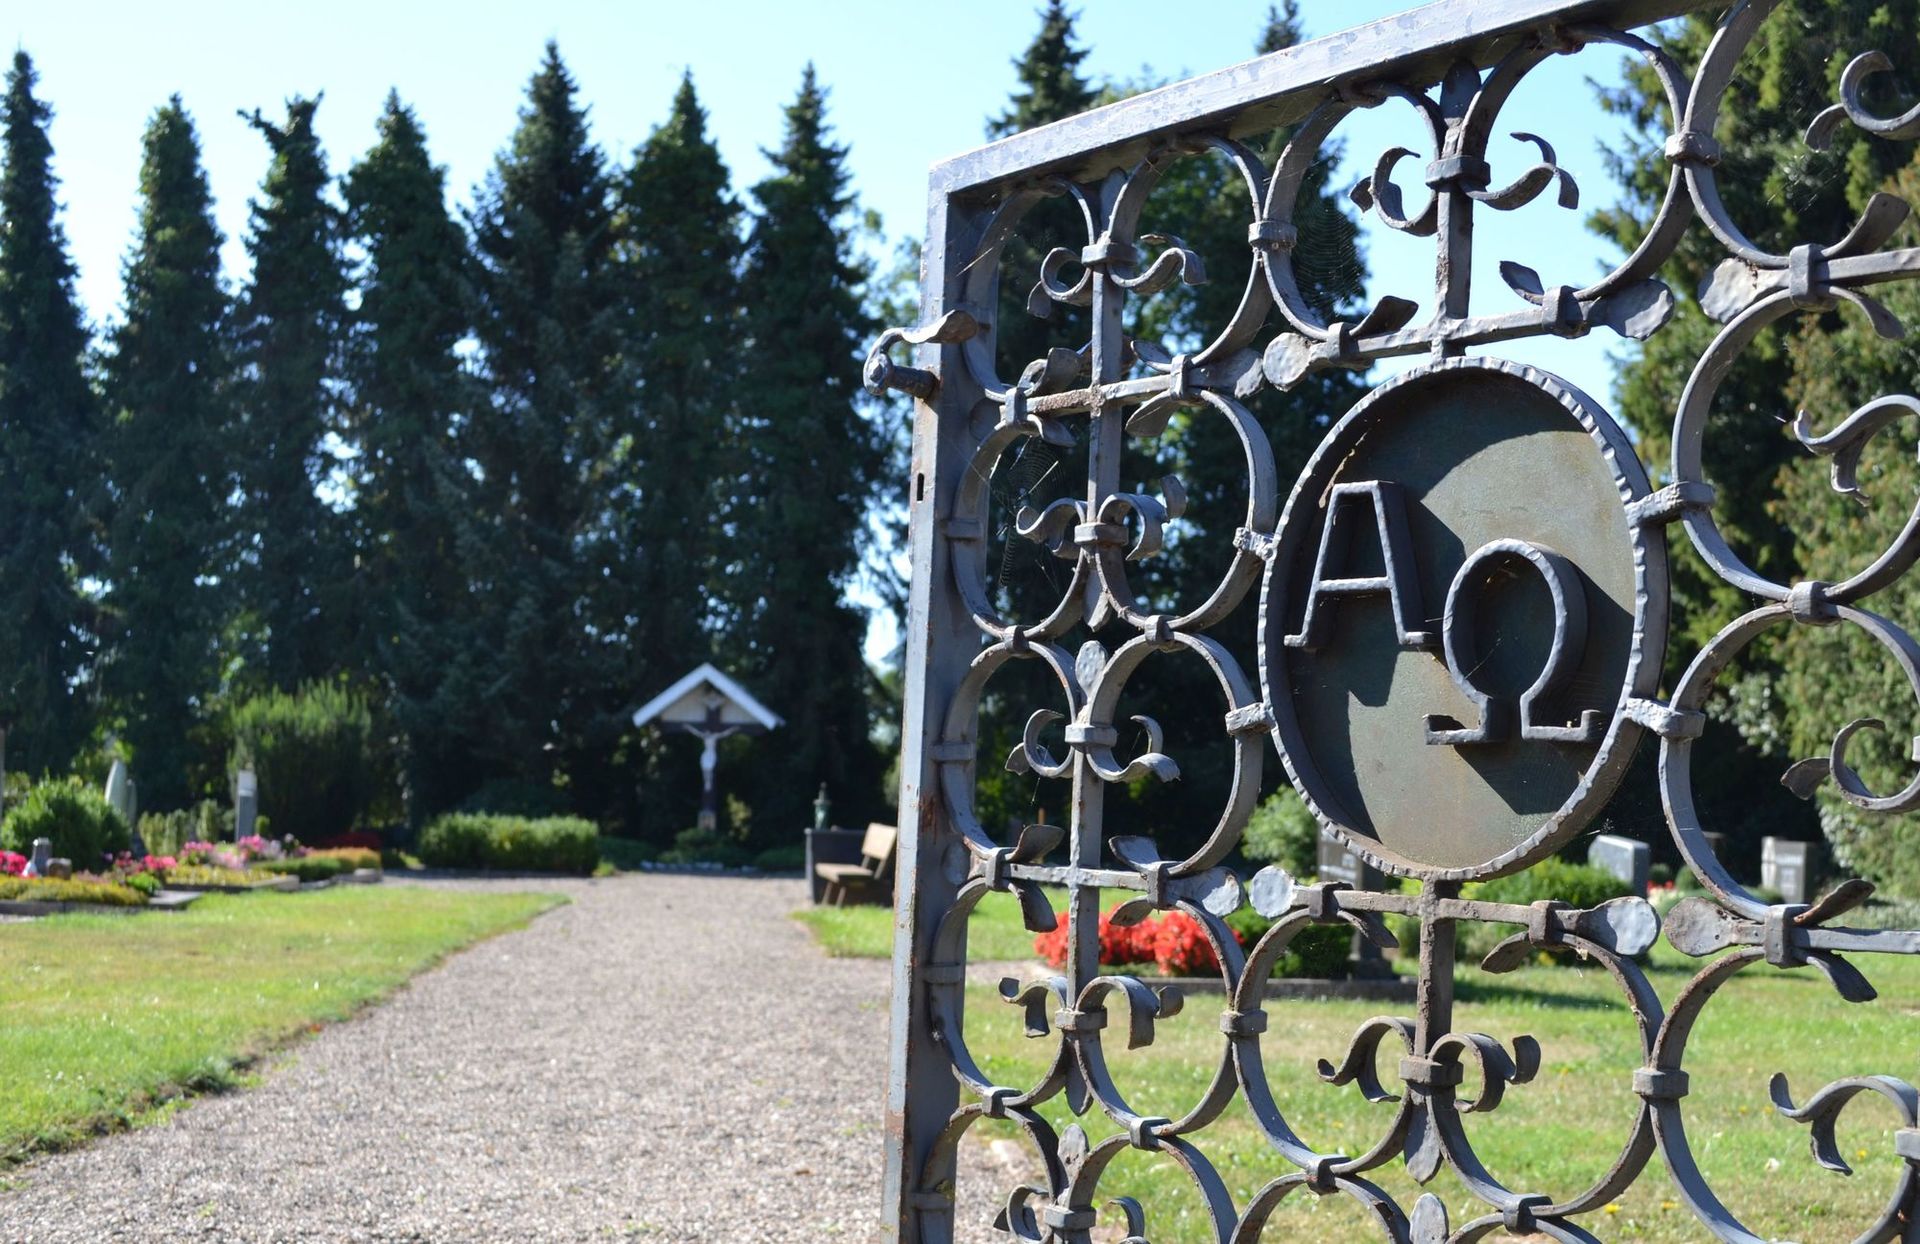 Katholischer Friedhof in Ruthe, geöffnetes Tor